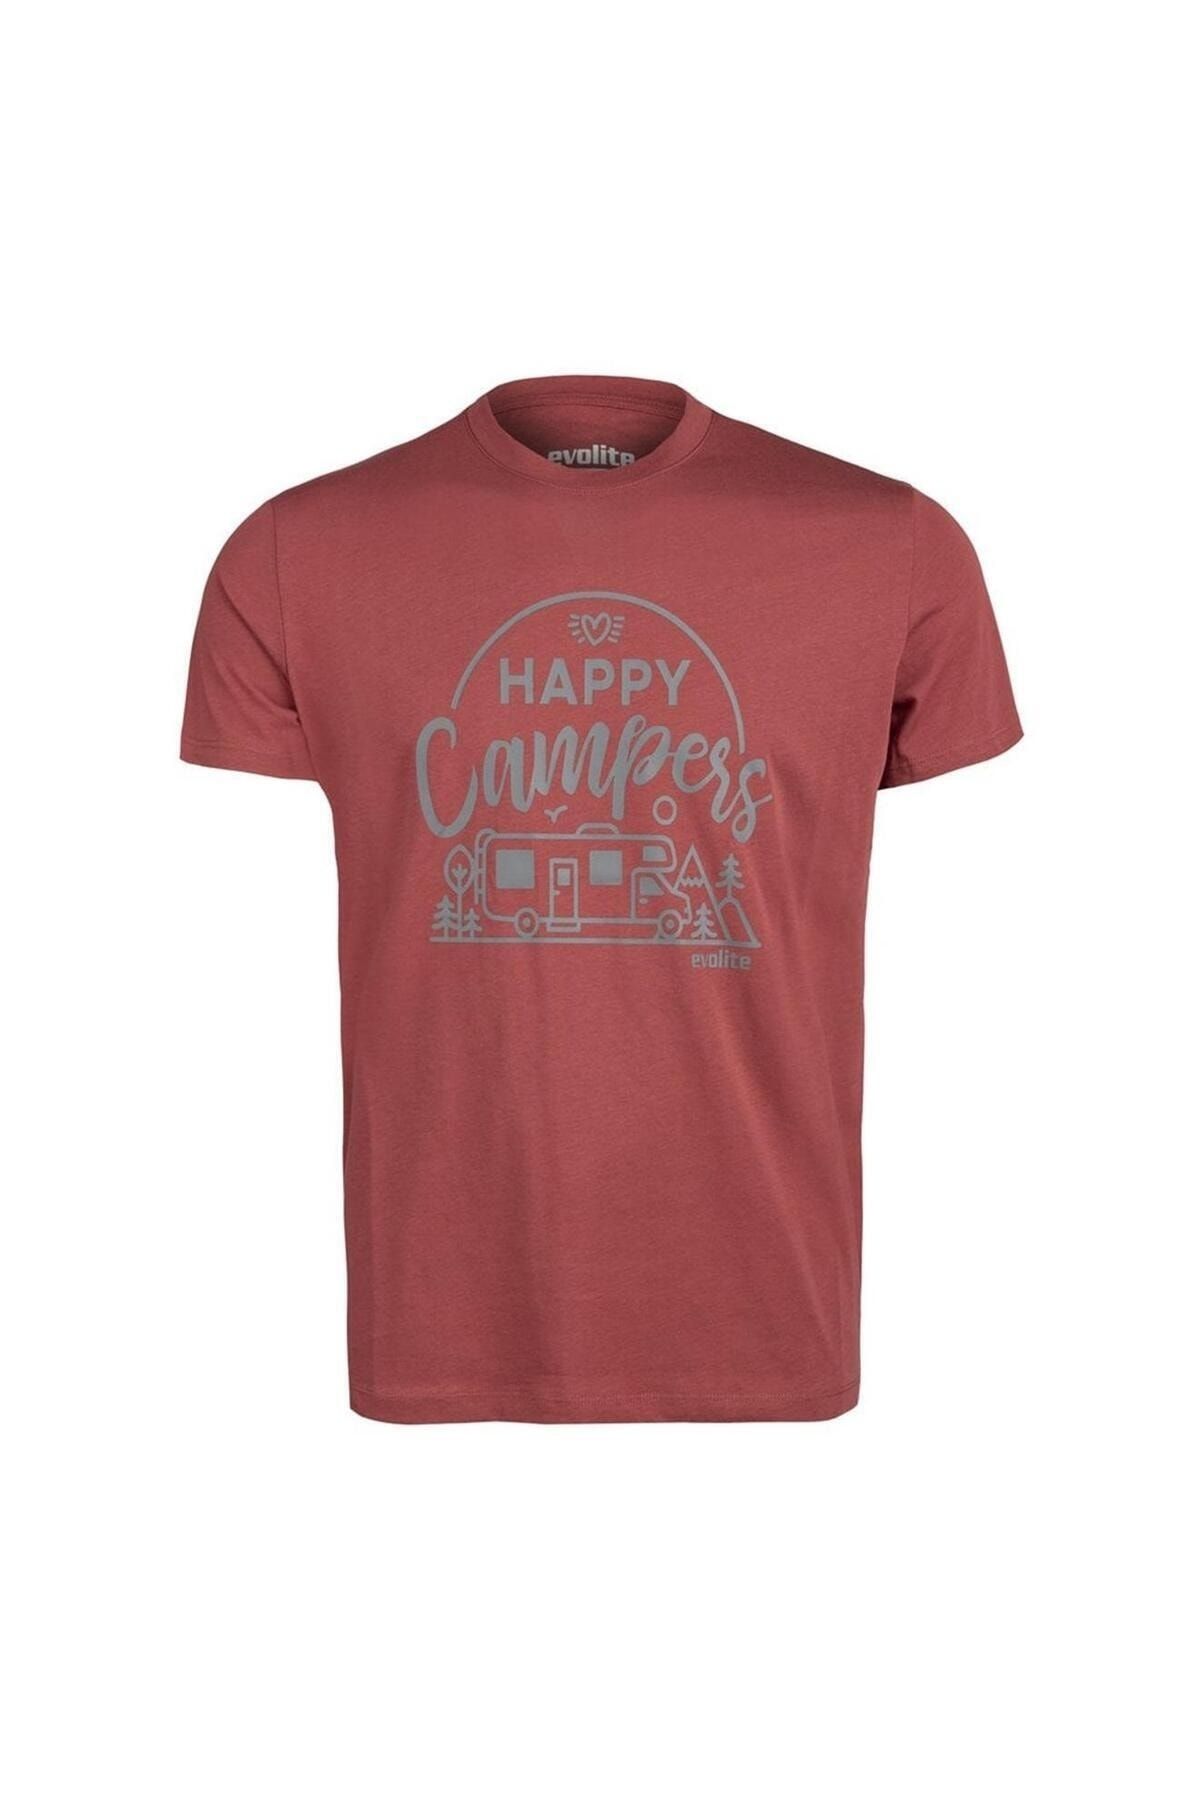 Evolite Happy Campers Tshirt Kırmızı XXLarge